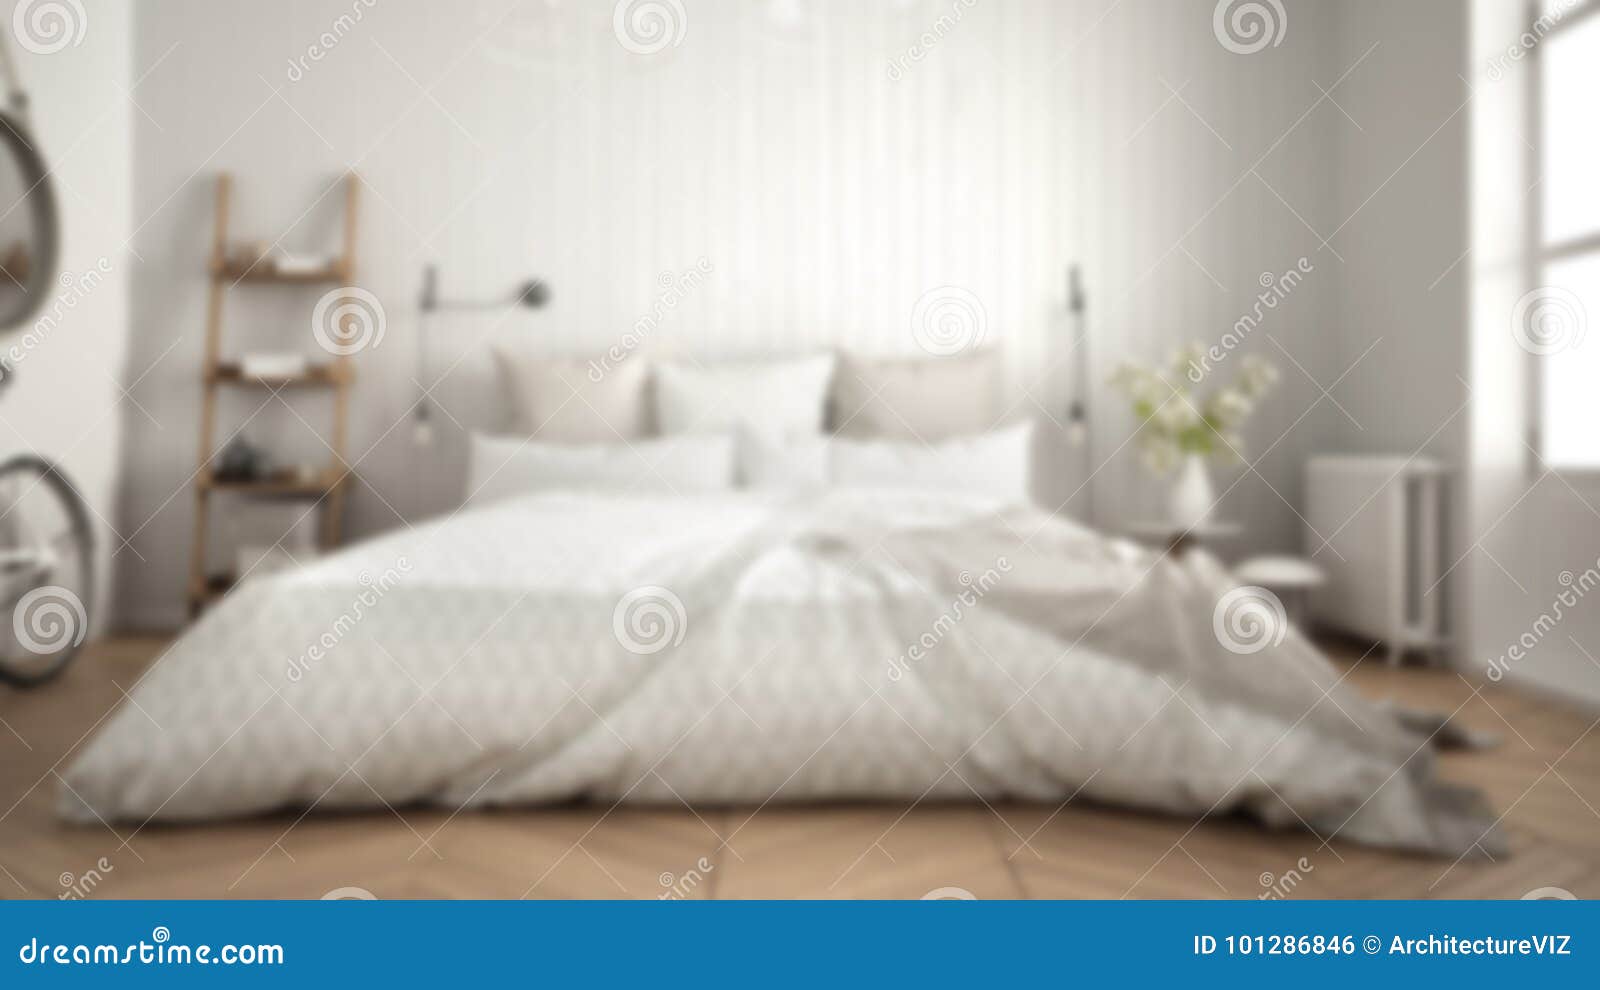 Blur Background Interior Design, White and Gray Modern Bedroom W Stock ...